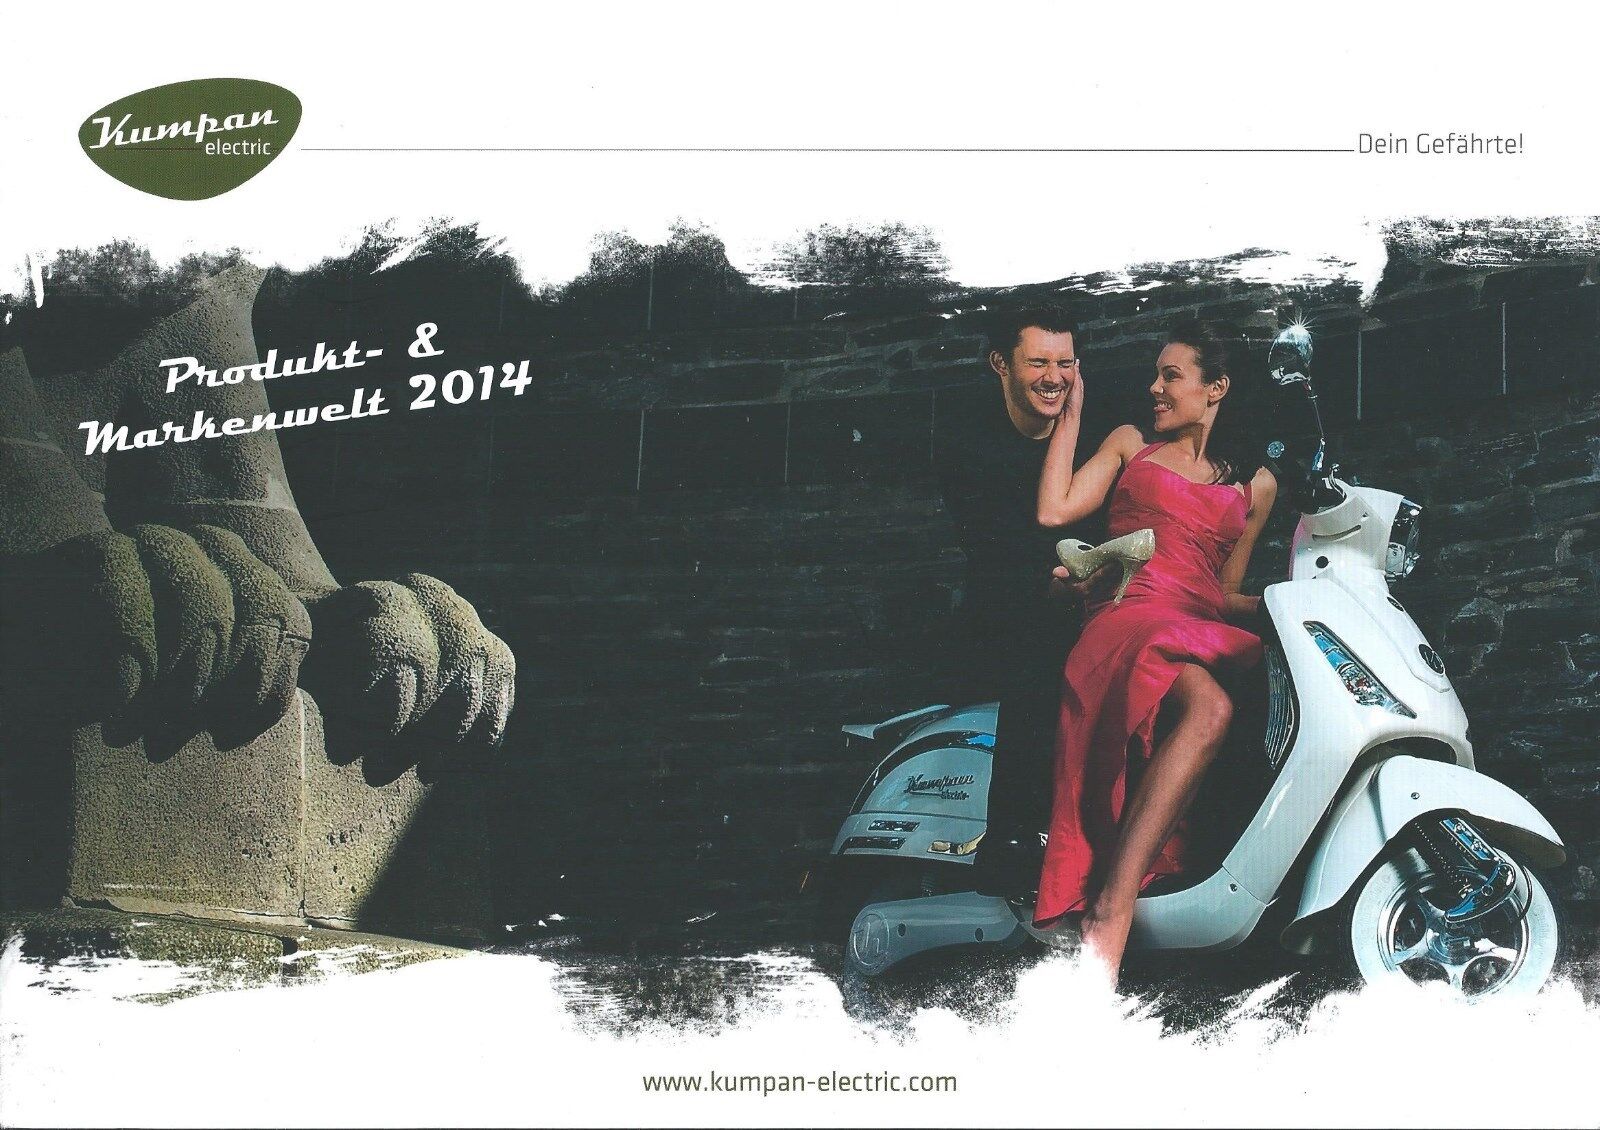 Scooter Brochure - Kumpan Electric - Product Line 2014 - GERMAN language (DC709)